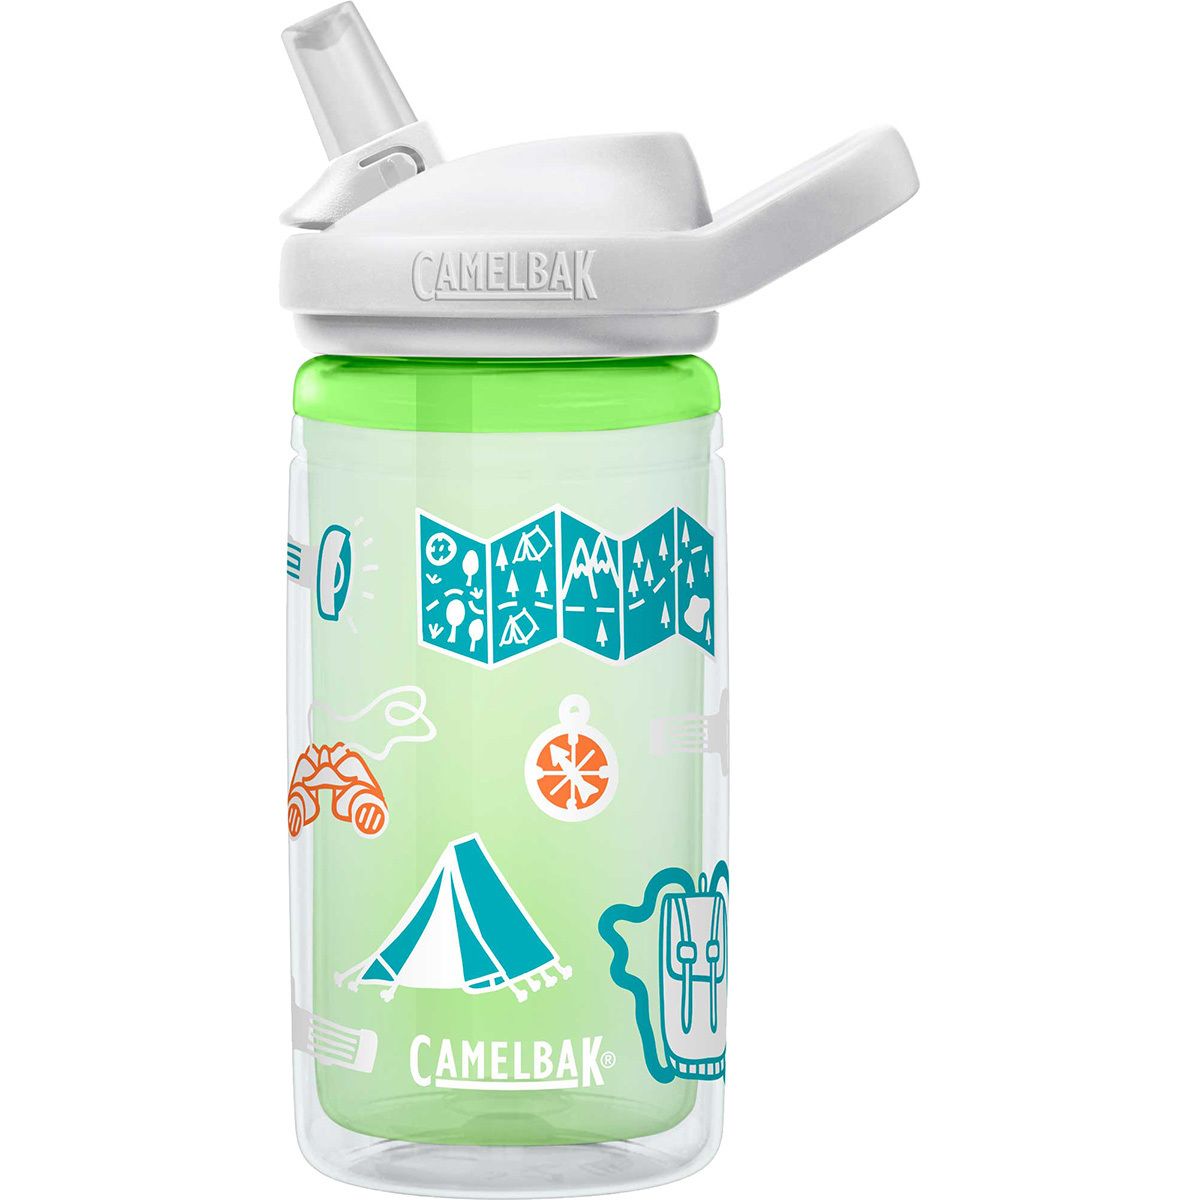 CamelBak - Eddy+ Insulated 14oz Water Bottle - Kids'